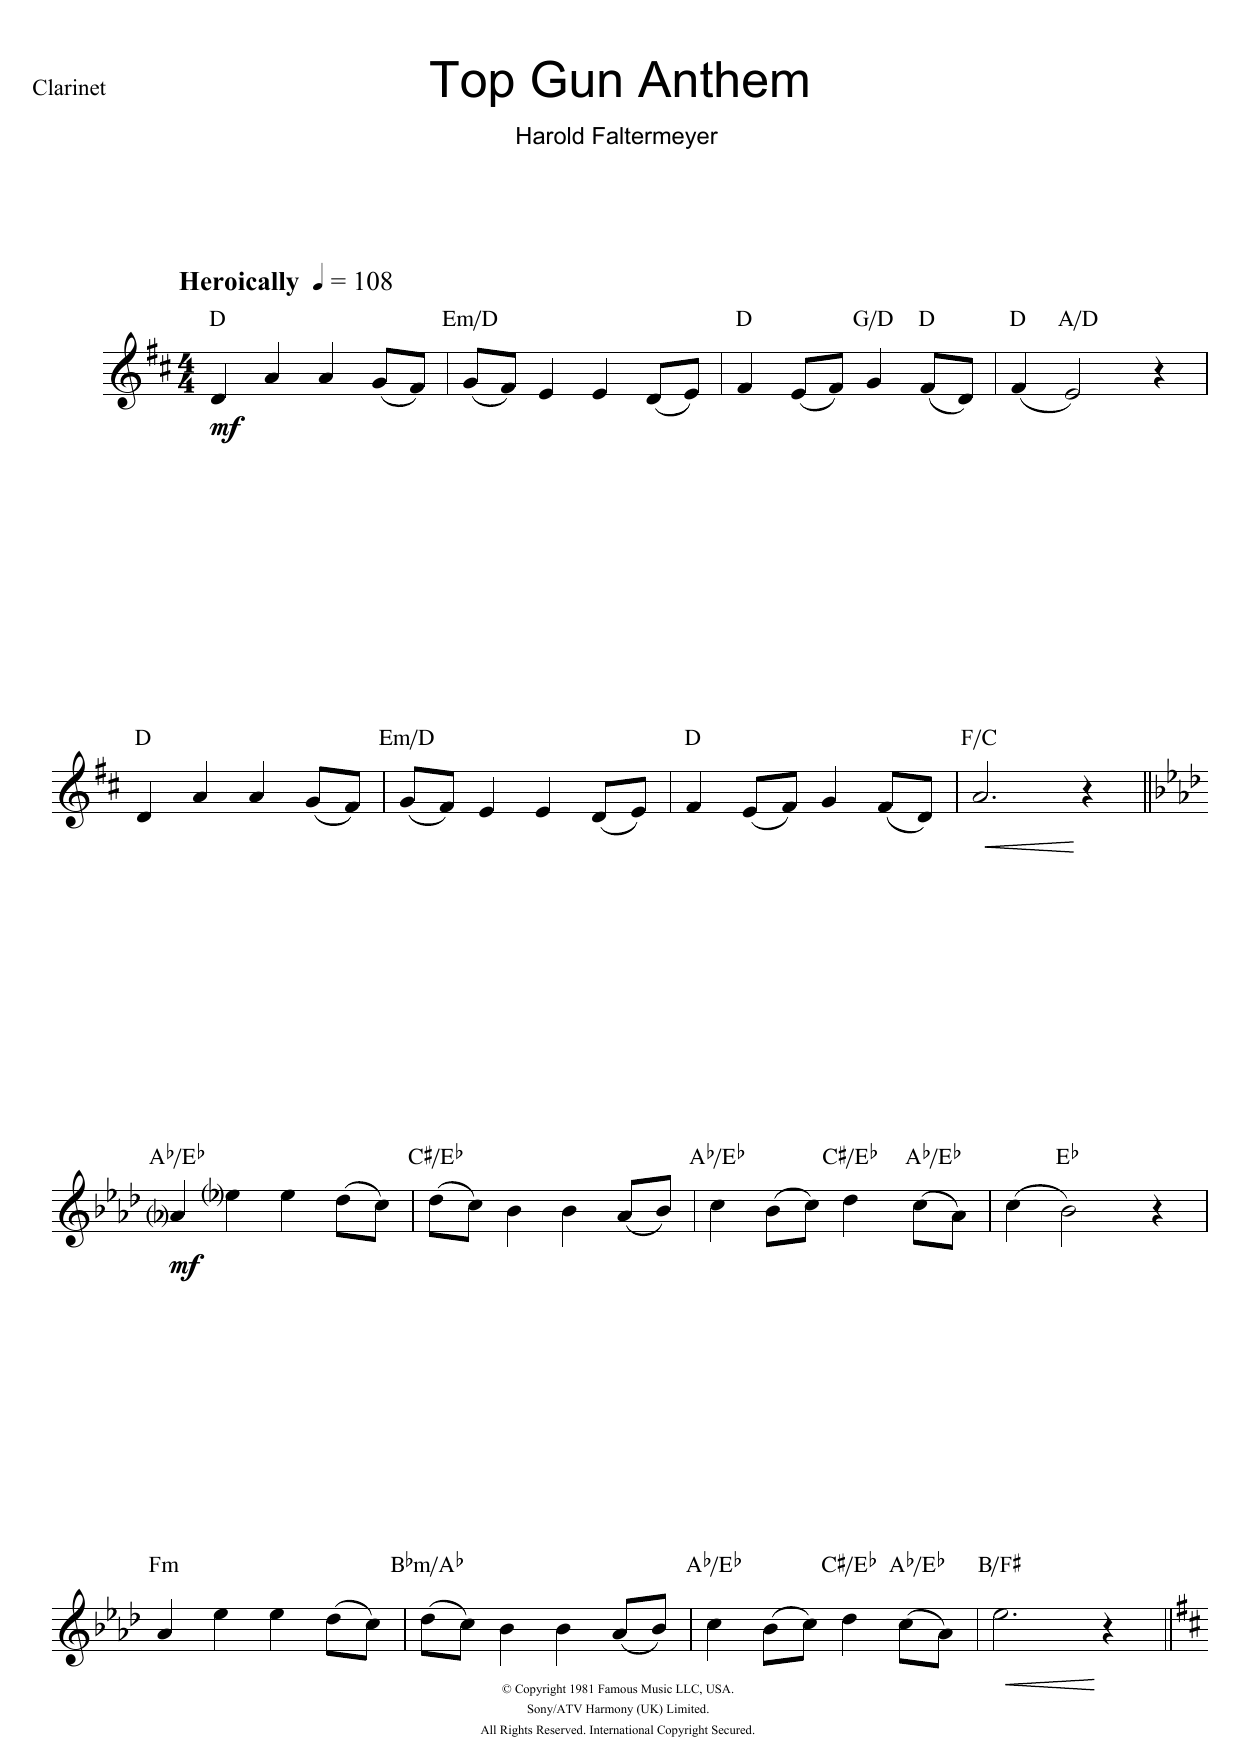 Harold Faltermeyer Top Gun (Anthem) Sheet Music Notes & Chords for Flute - Download or Print PDF